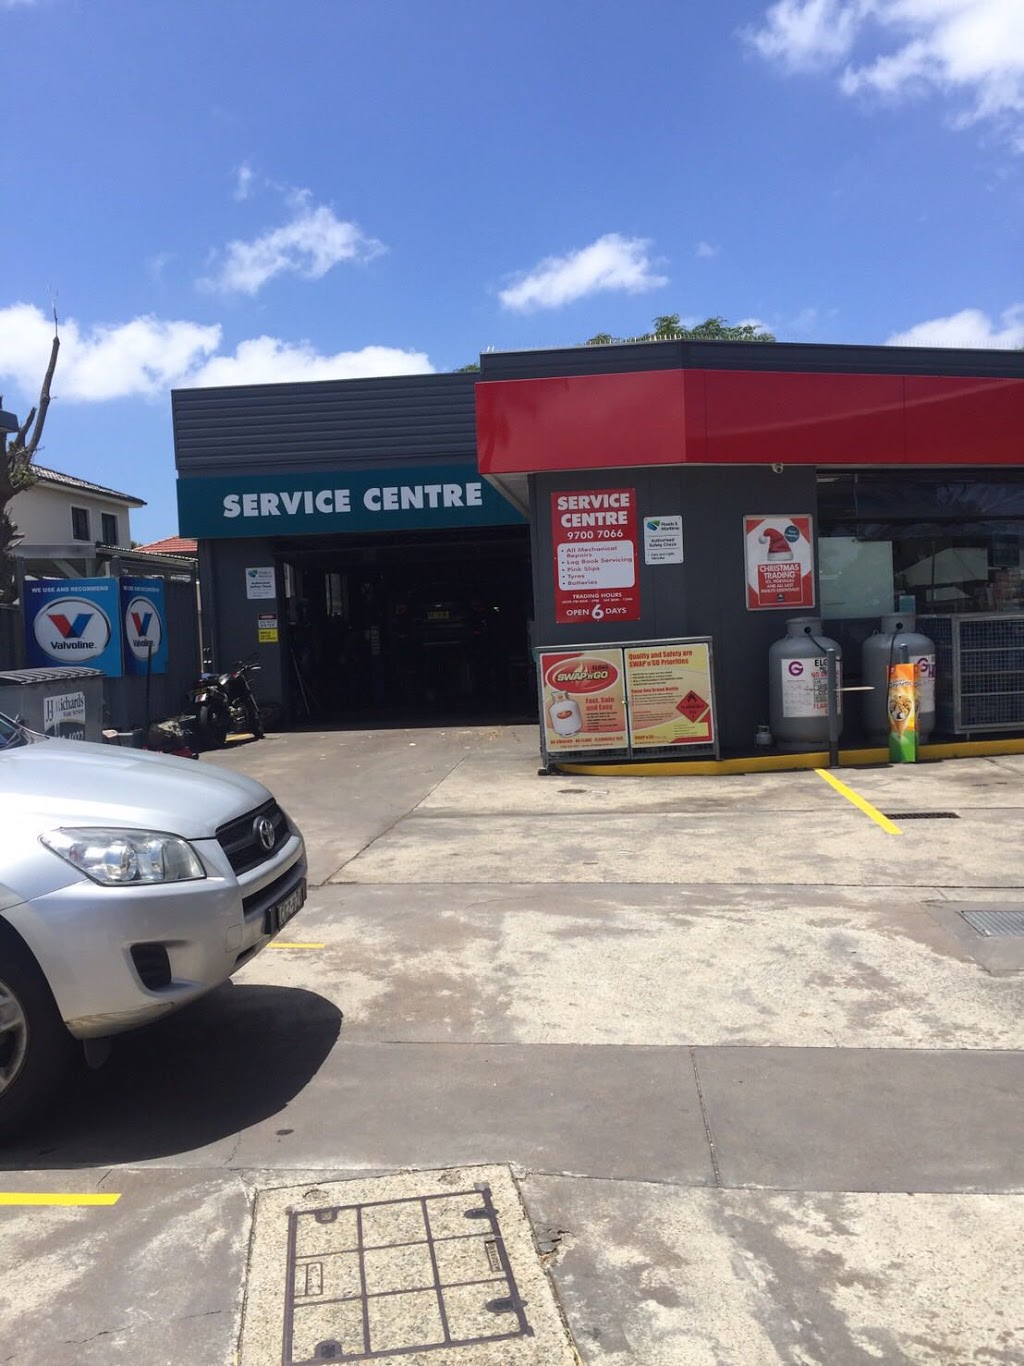 Budget Petrol Eastlakes | 102 Maloney St, Eastlakes NSW 2018, Australia | Phone: (02) 9700 7176